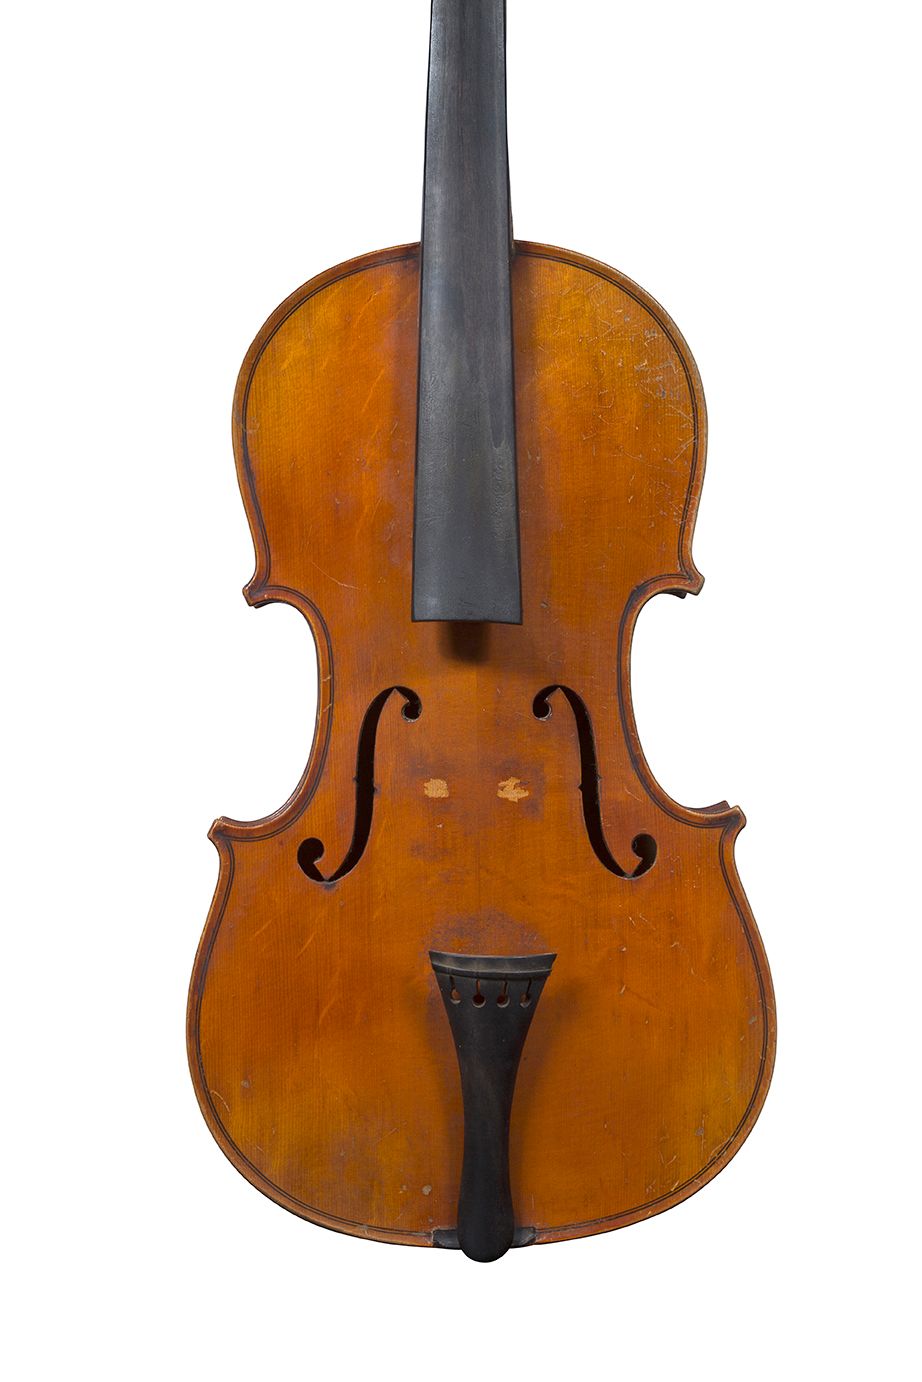 Null 3/4尺寸的研究型小提琴
20世纪初在Mirecourt制造
保存状态极佳 
背面有332毫米